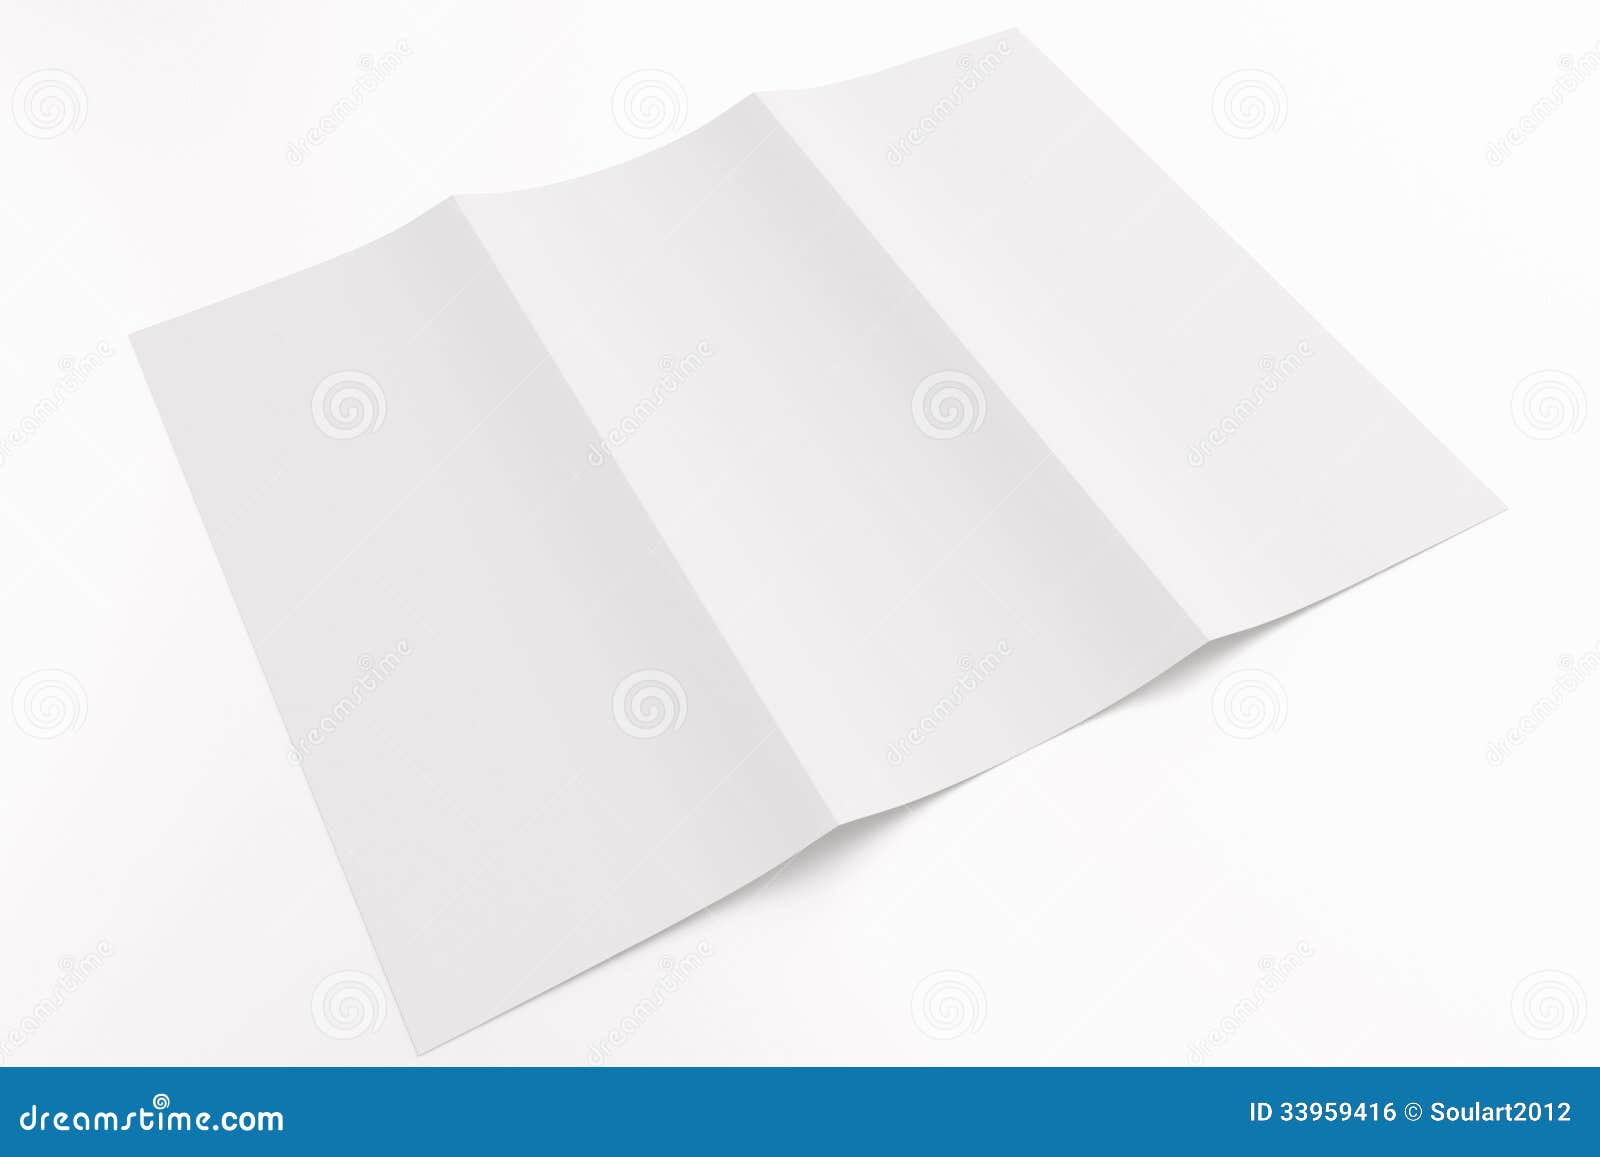 blank tri fold brochure  on white